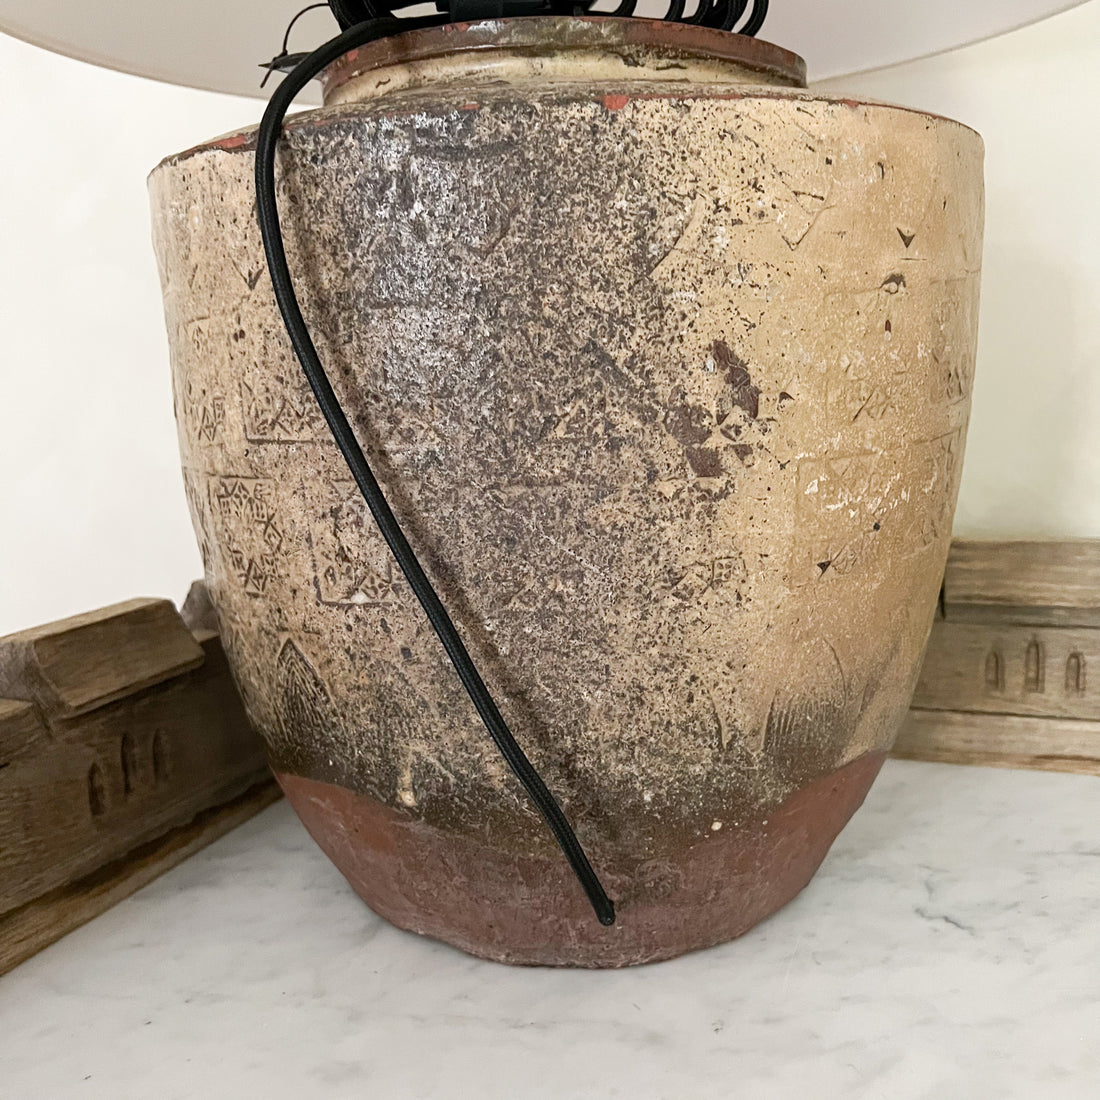 Vintage Chinese Ceramic Vase Table Lamp